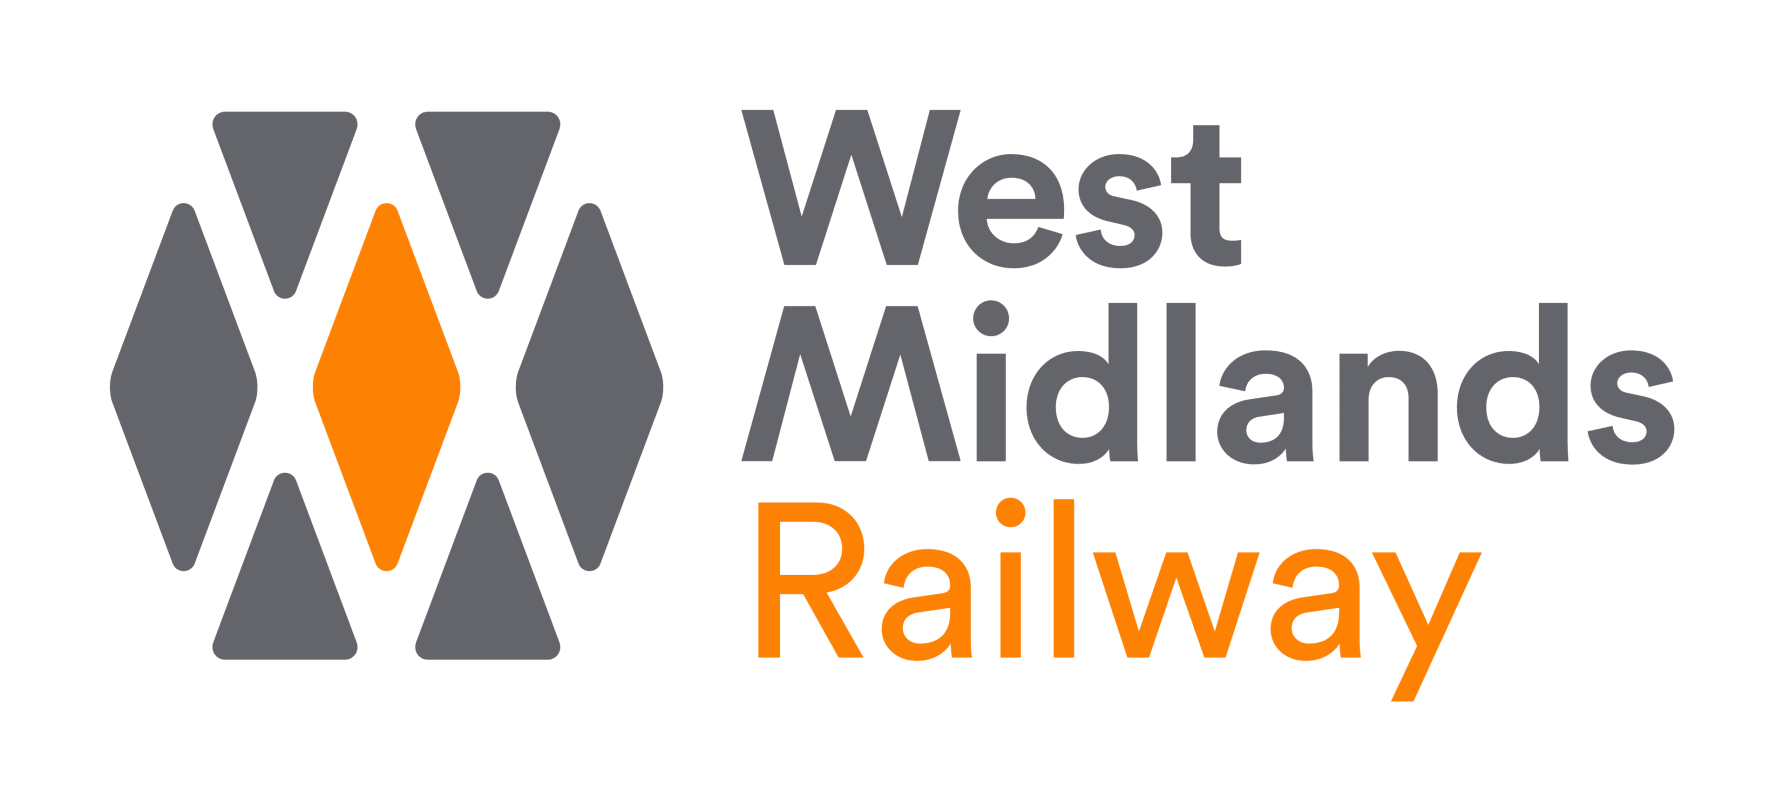 New train timetable: West Midlands Railway responds to customer feedback